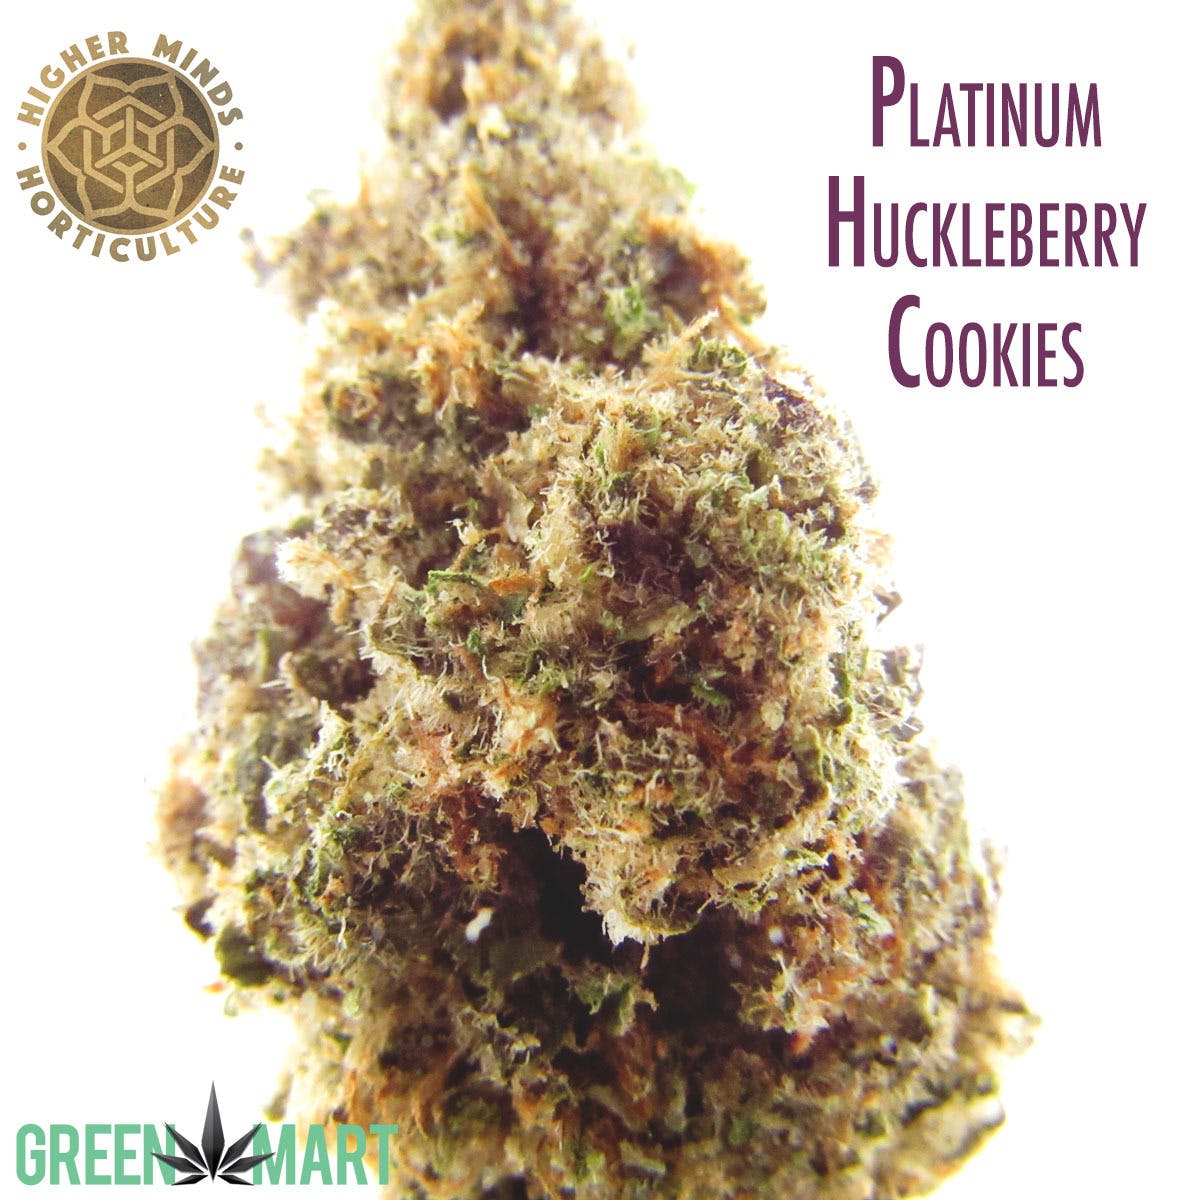 Platinum Huckleberry Cookies - Heavy Pre-packs!